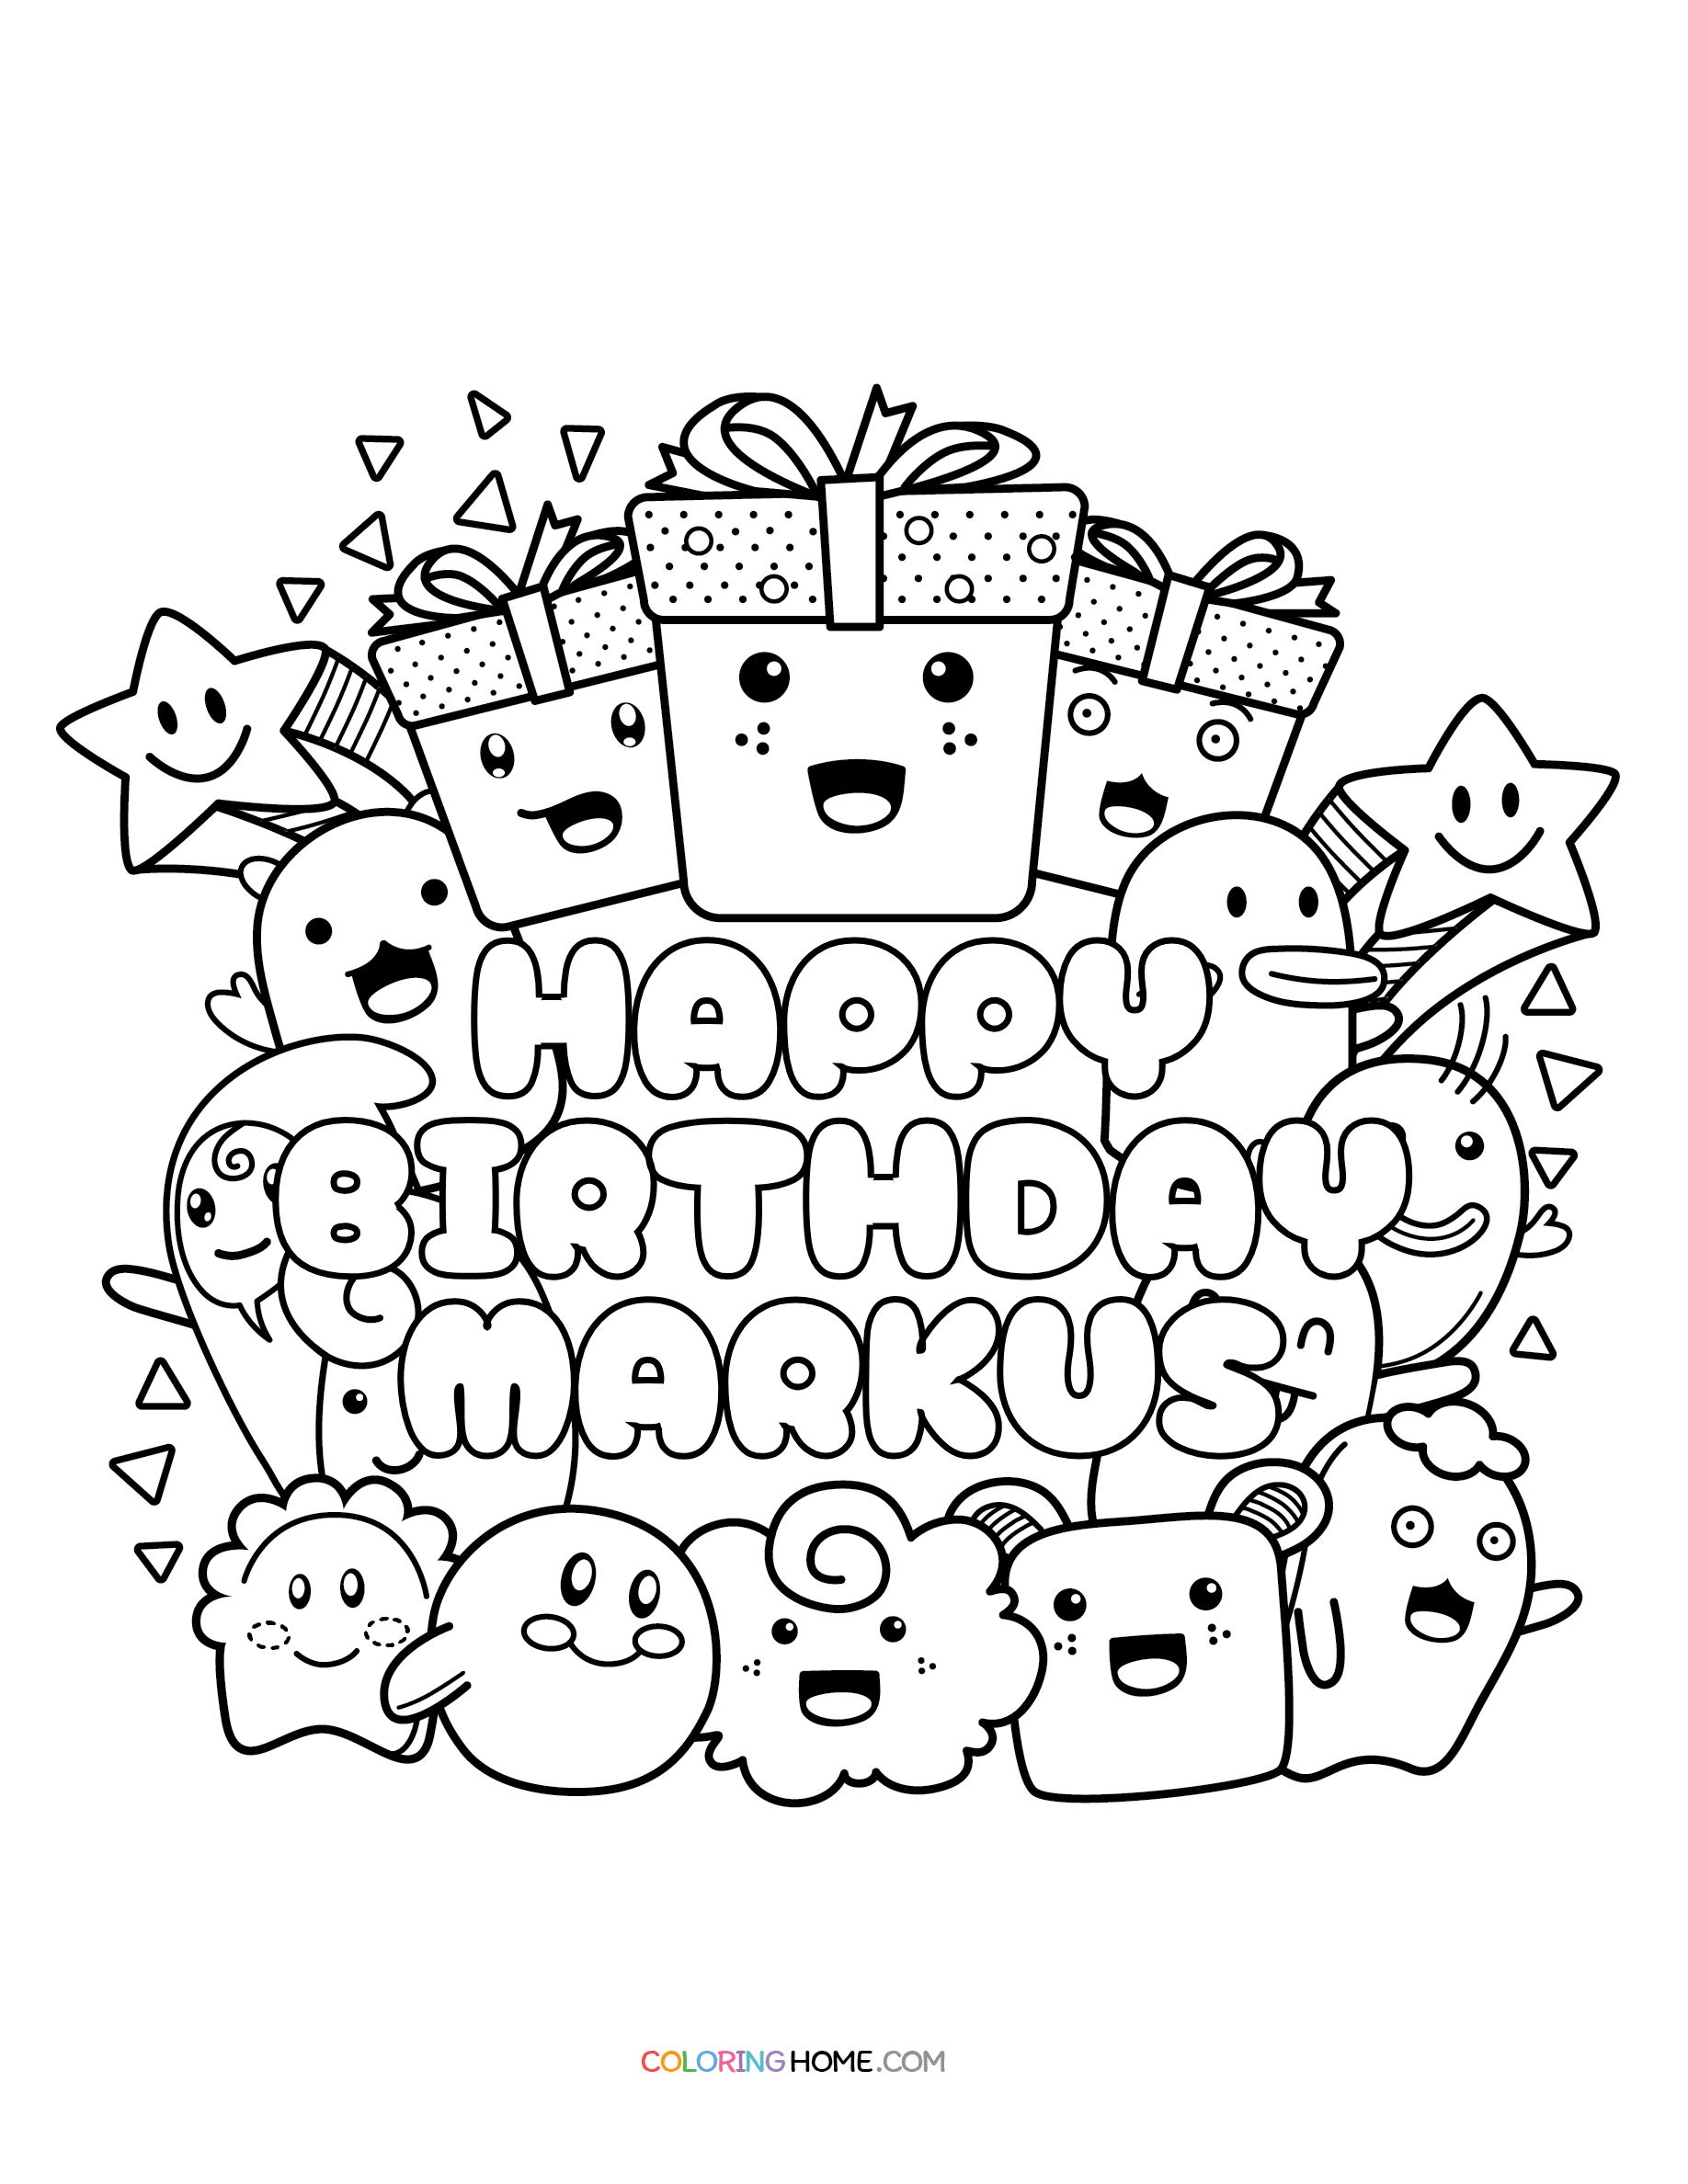 Happy Birthday Markus coloring page